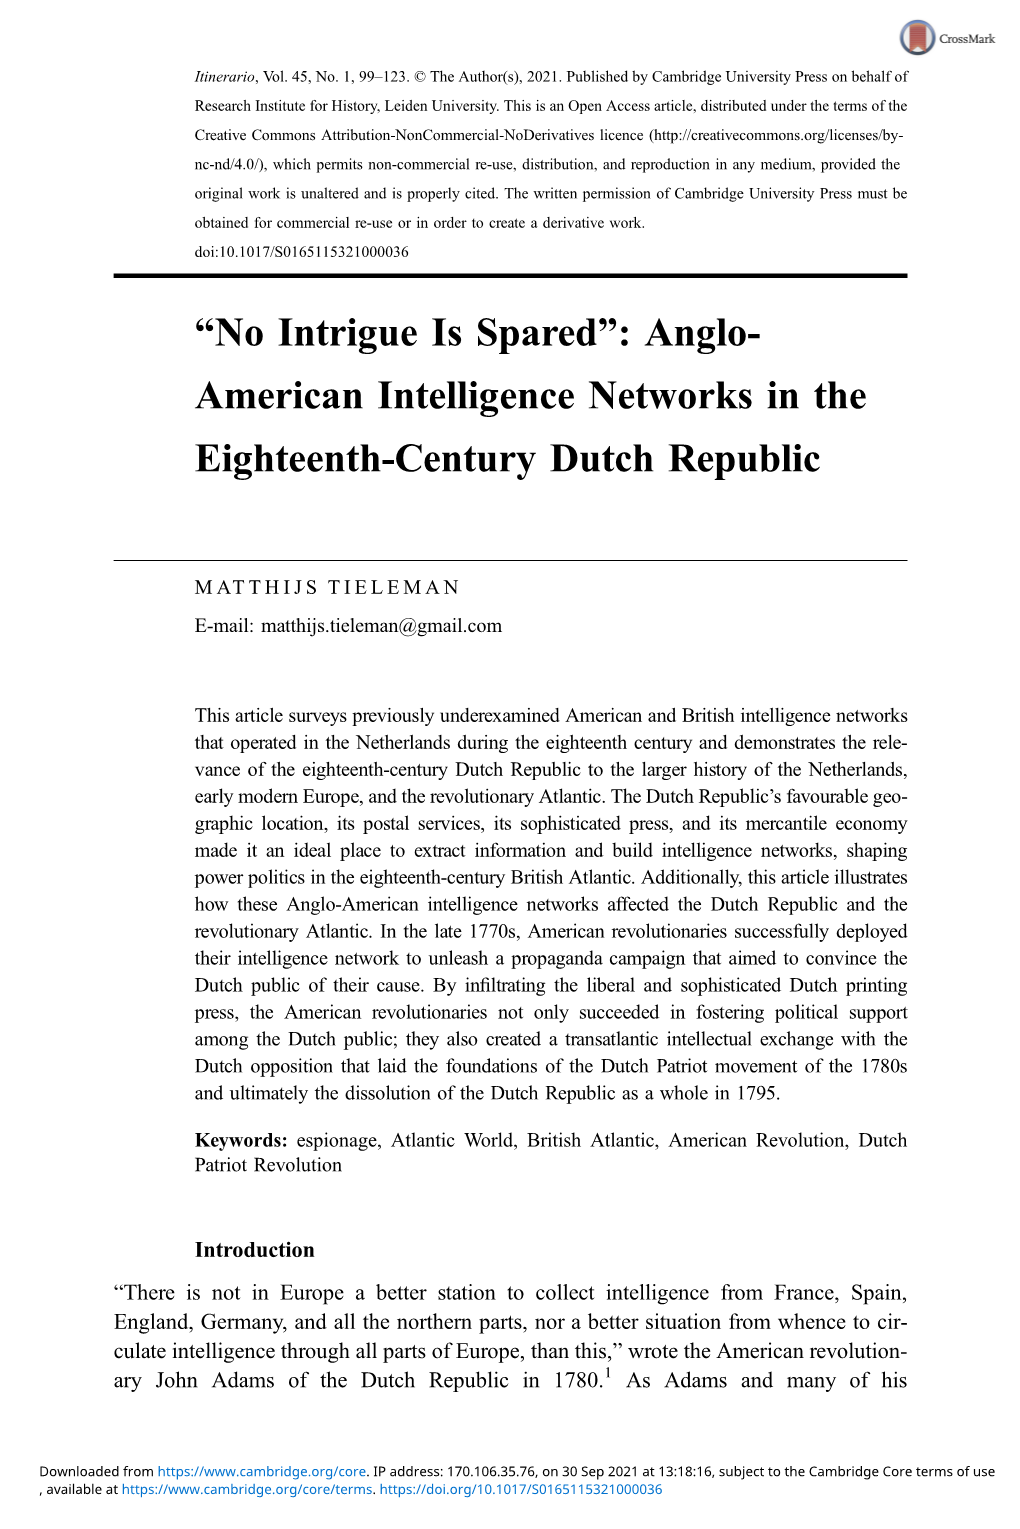 American Intelligence Networks in the Eighteenth-Century Dutch Republic